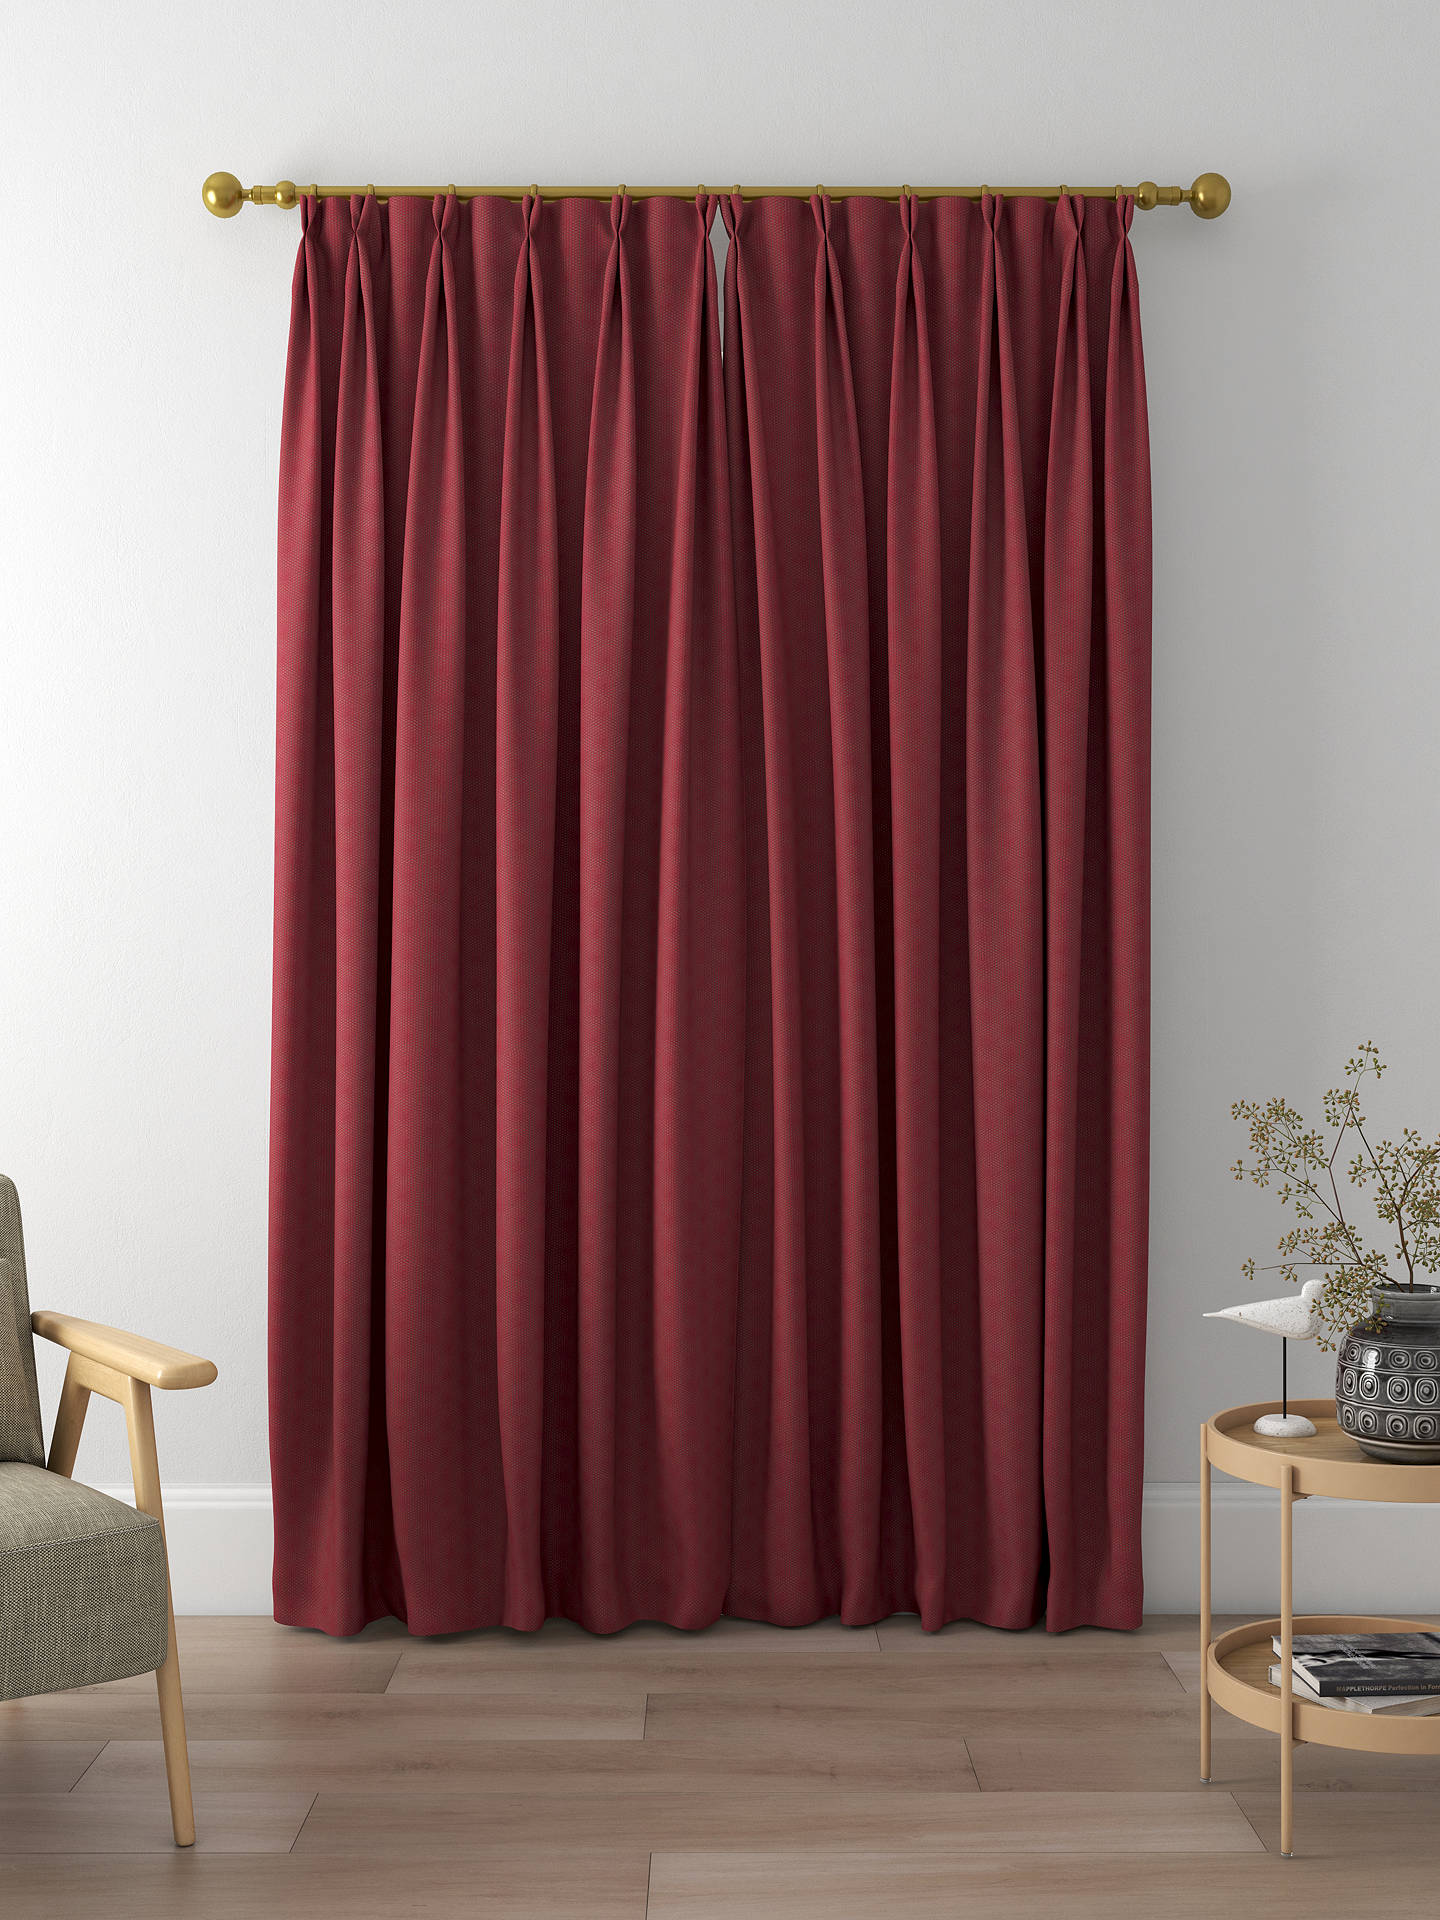 Prestigious Textiles Limitless Made to Measure Curtains, Cardinal